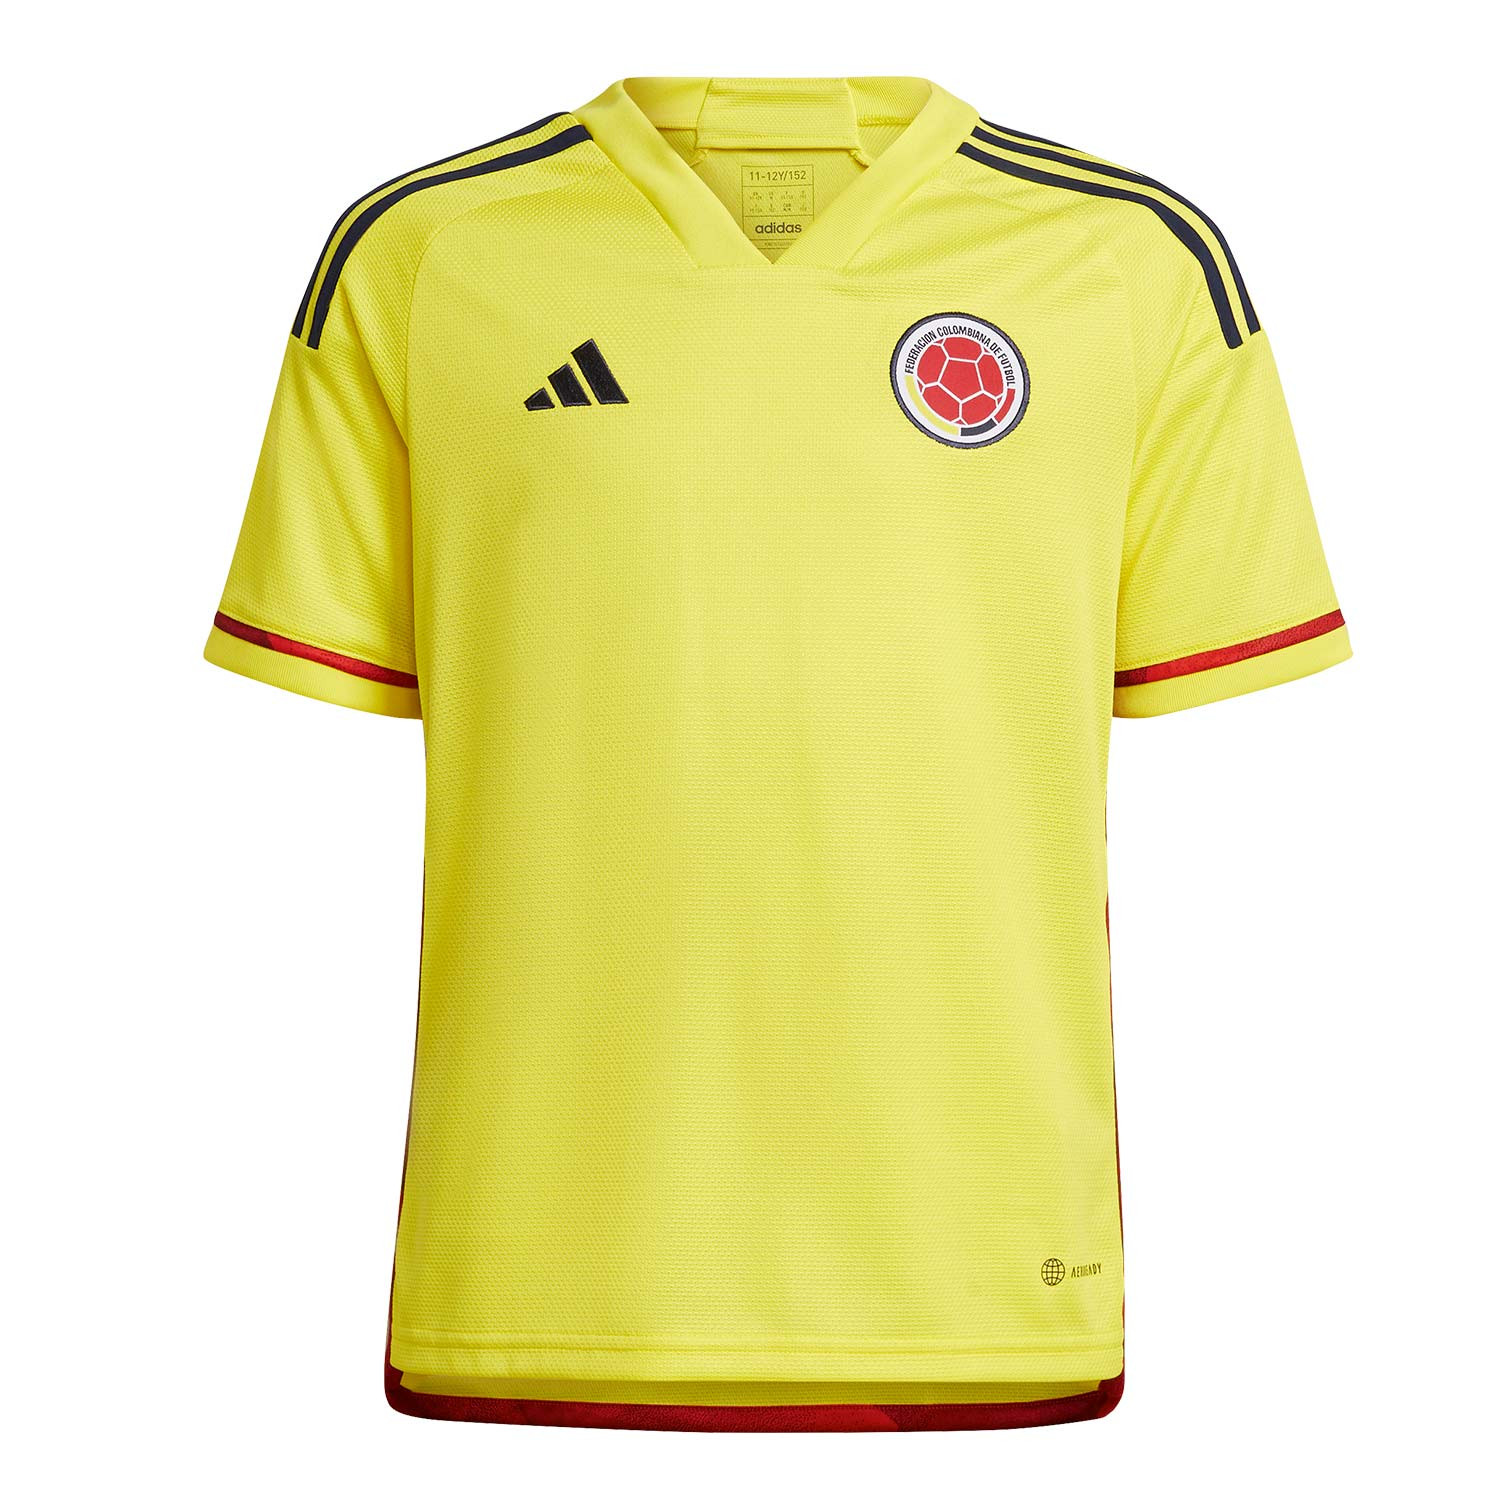 Camiseta niño adidas 2a Colombia 2020 2021